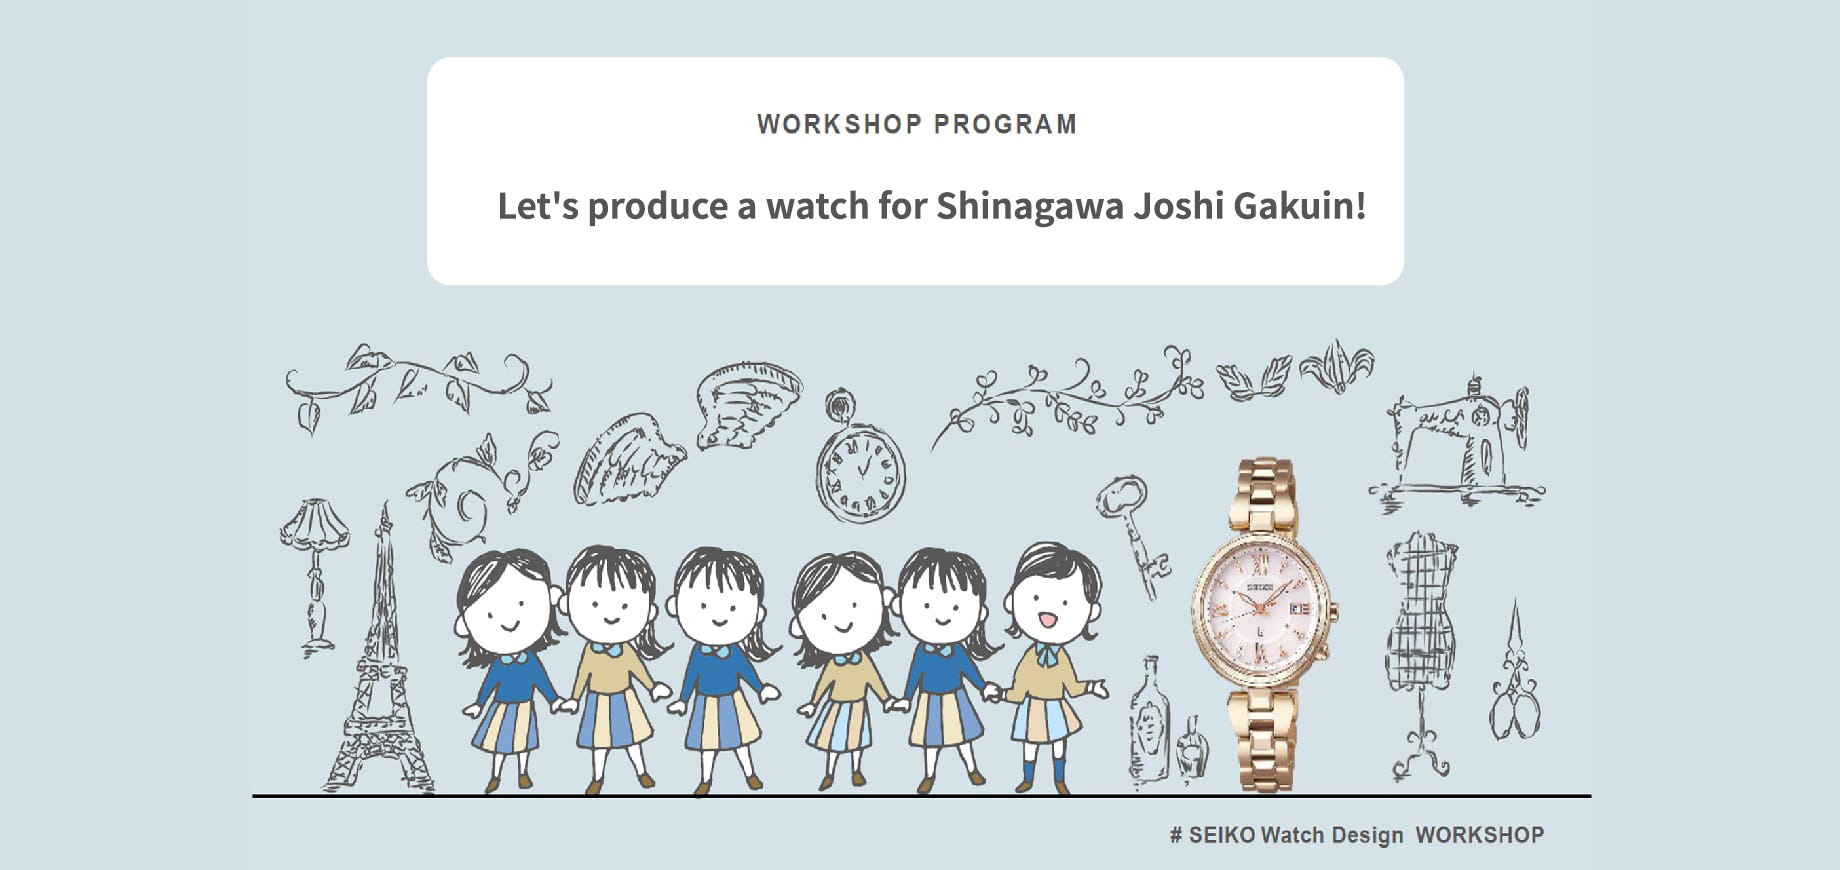 Let's produce a watch for Shinagawa Joshi Gakuin!